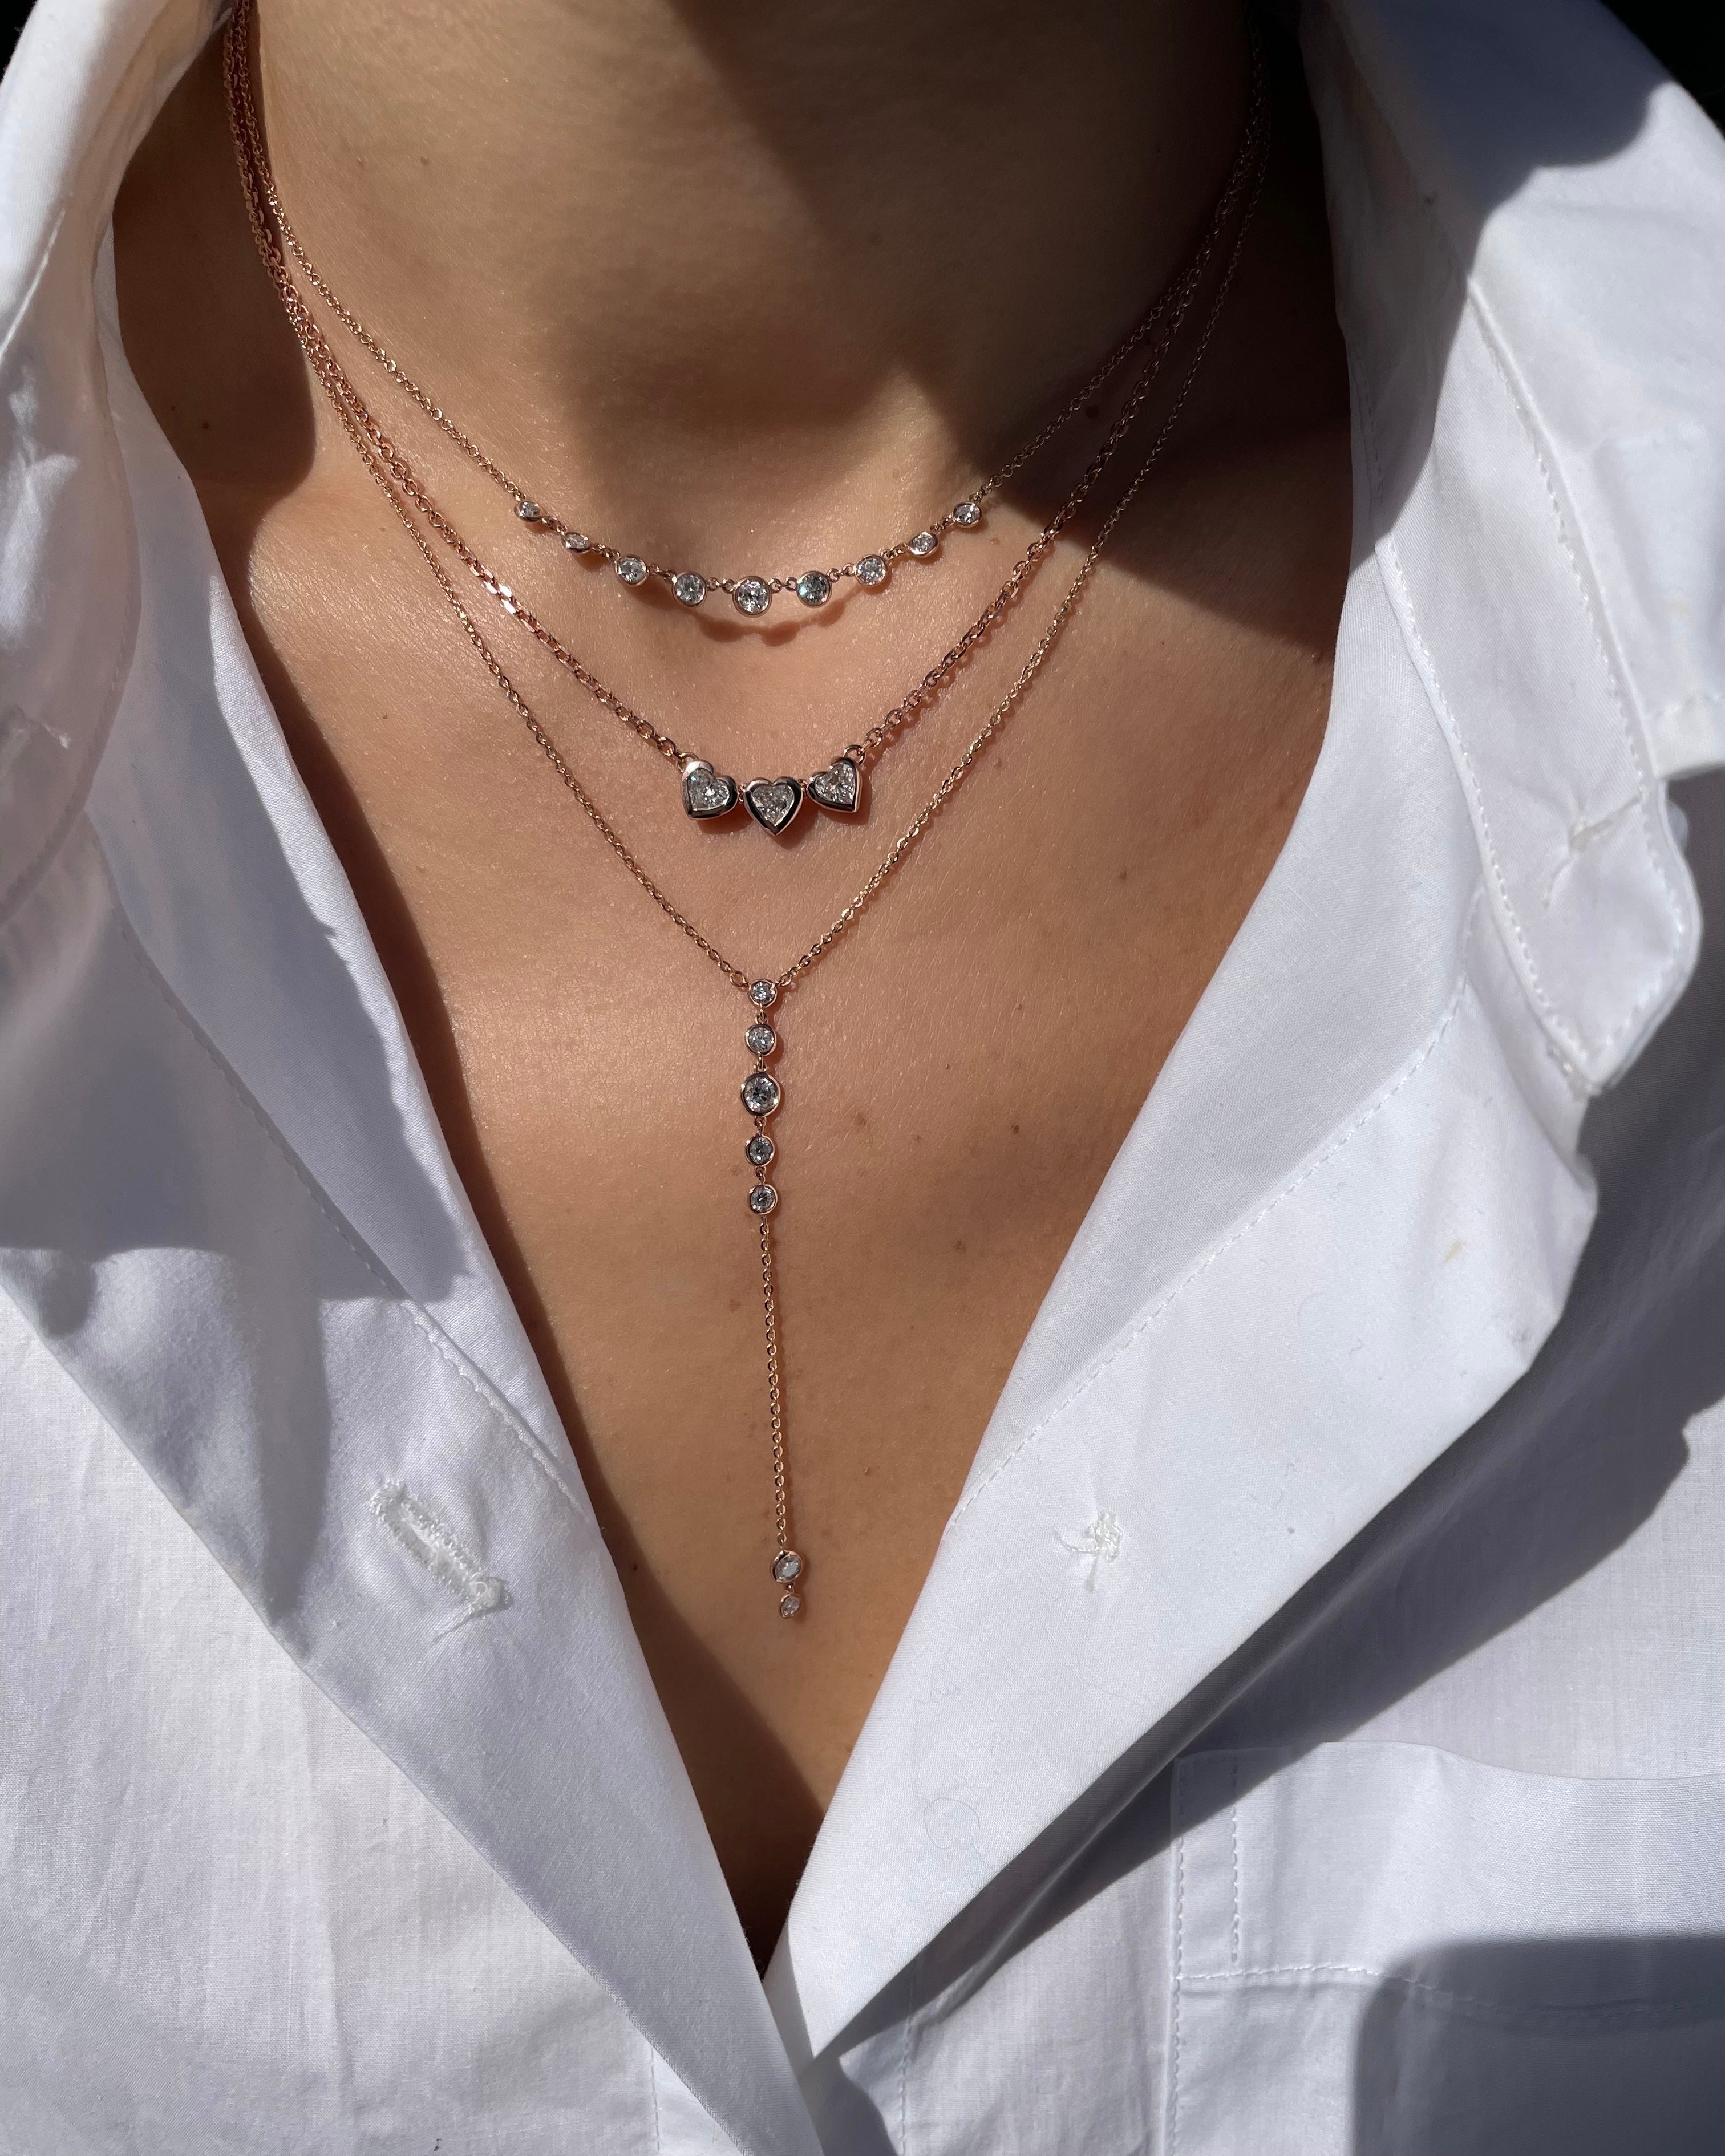 Bezel Lariat Necklace shown with the Bezel 3 Hearts Necklace and Bezel Mini Starstruck Necklace